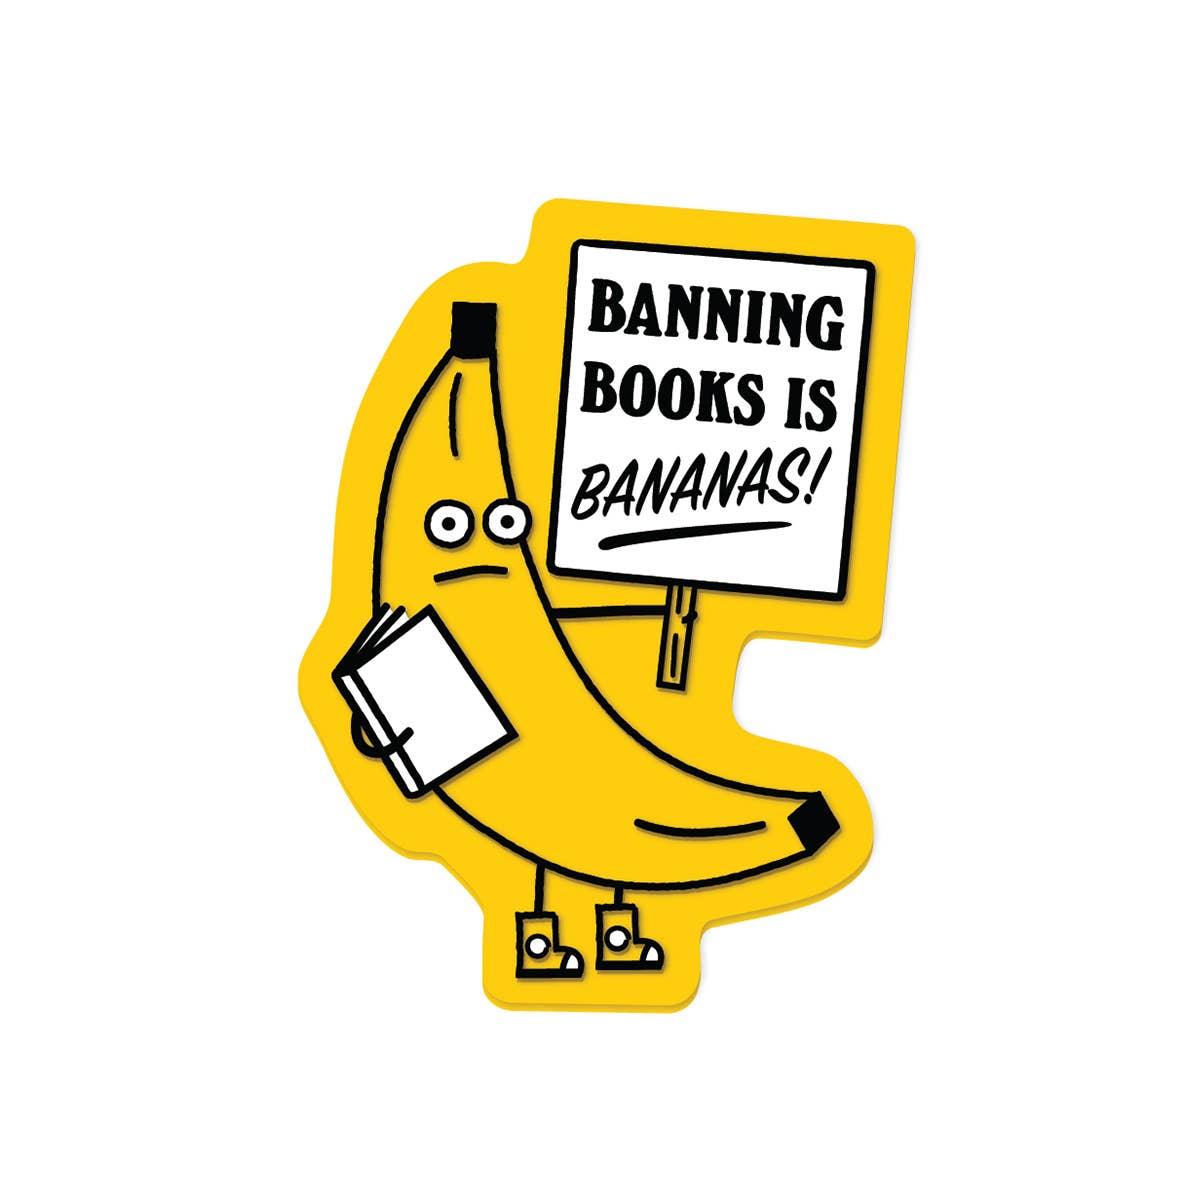 Magnet: Banning Books is Bananas!